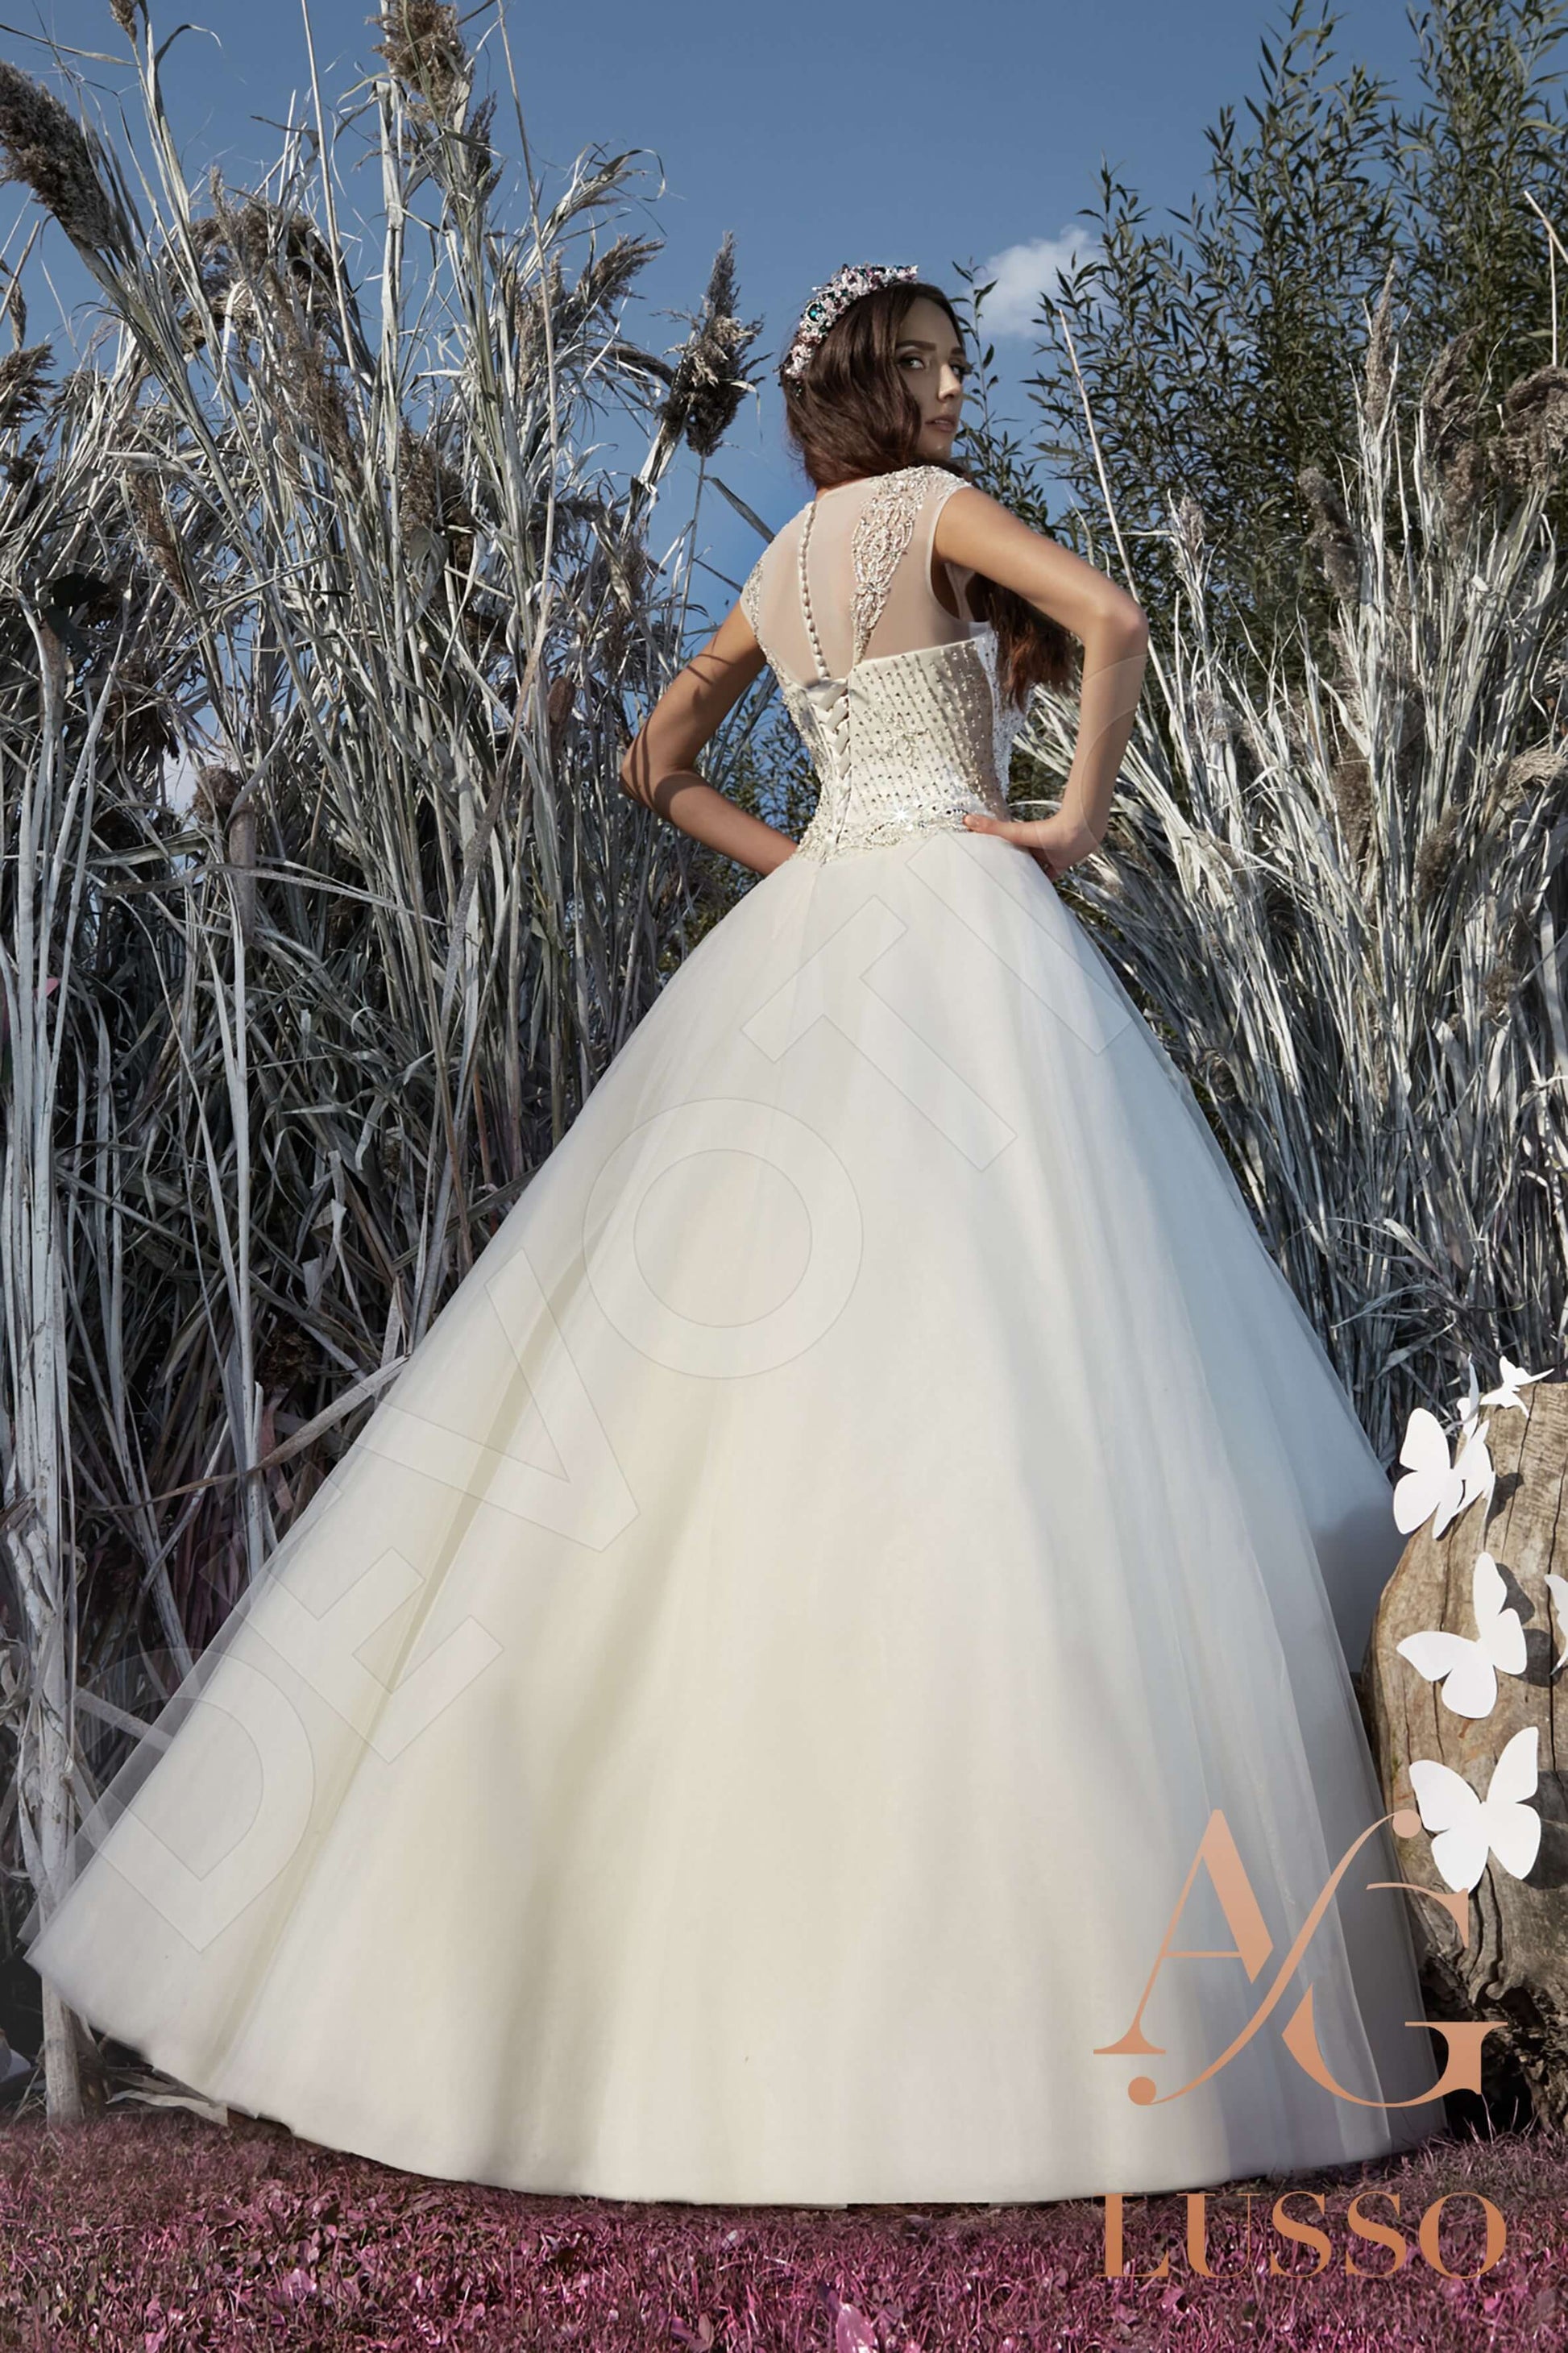 Megallie Princess/Ball Gown Sweetheart White Wedding dress